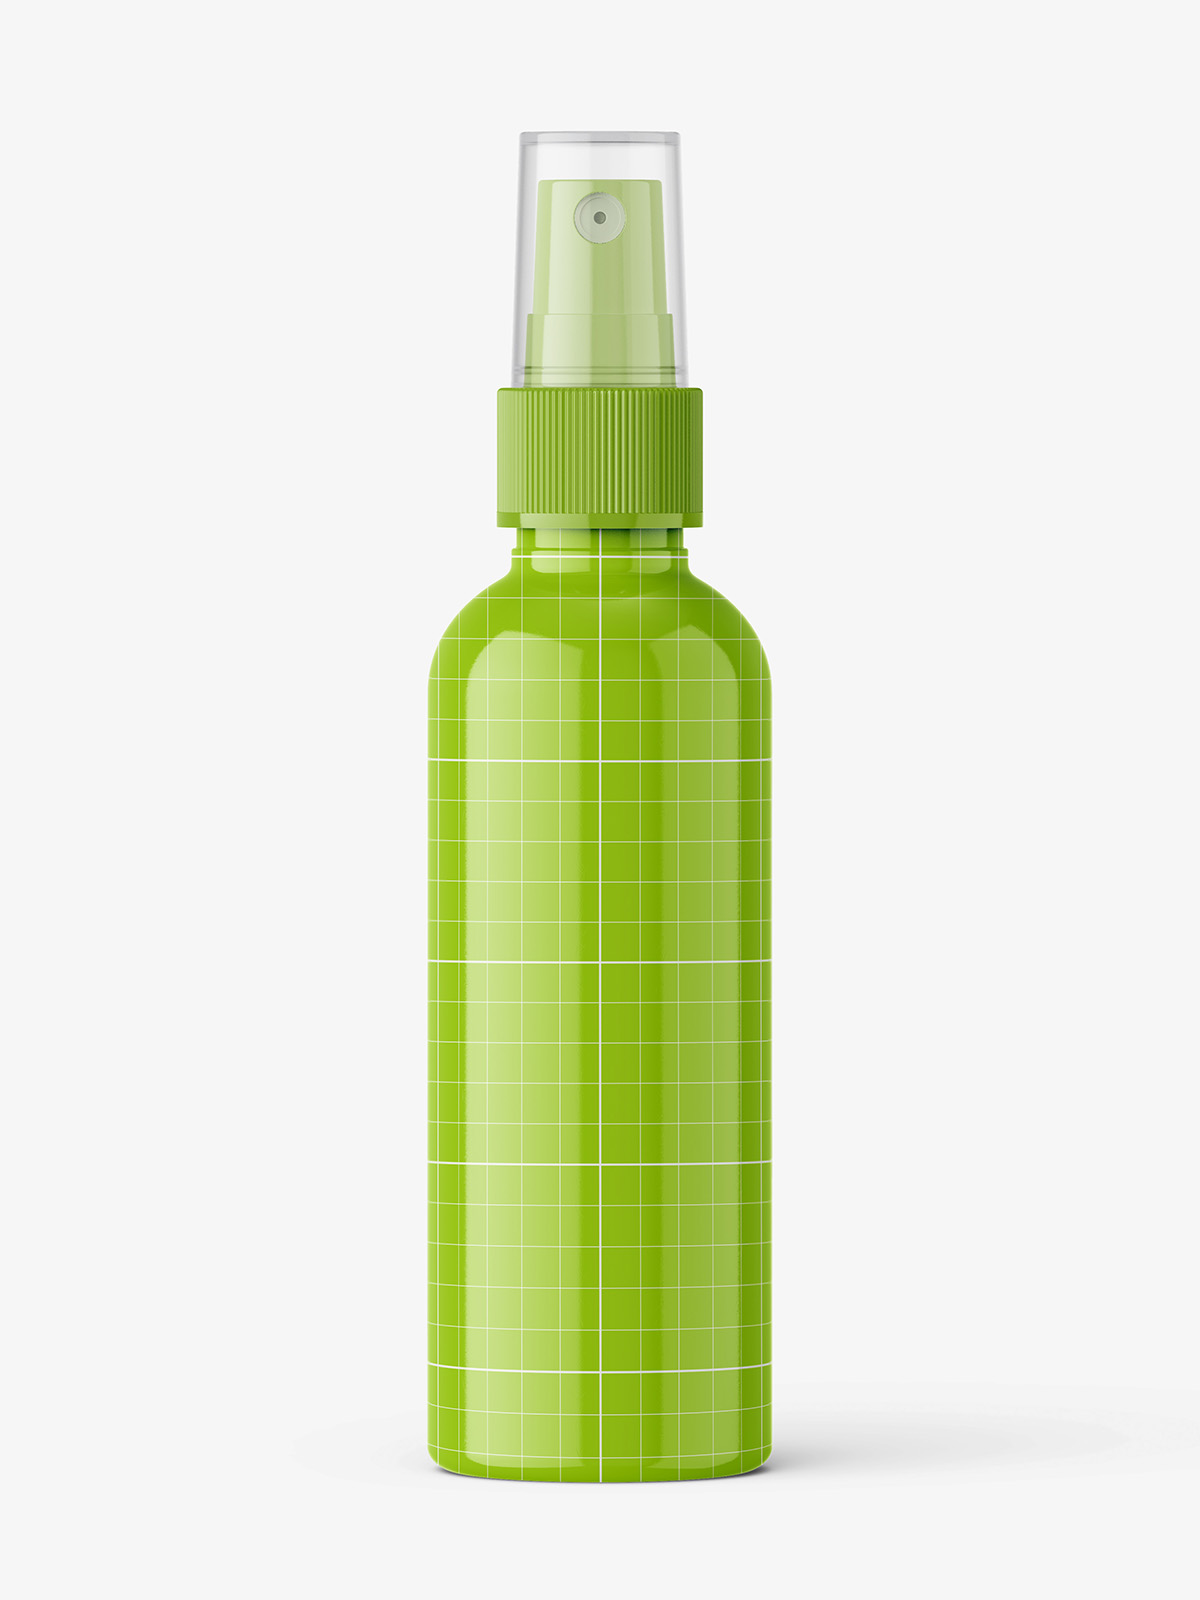 Download Glossy mist spray bottle mockup - Smarty Mockups